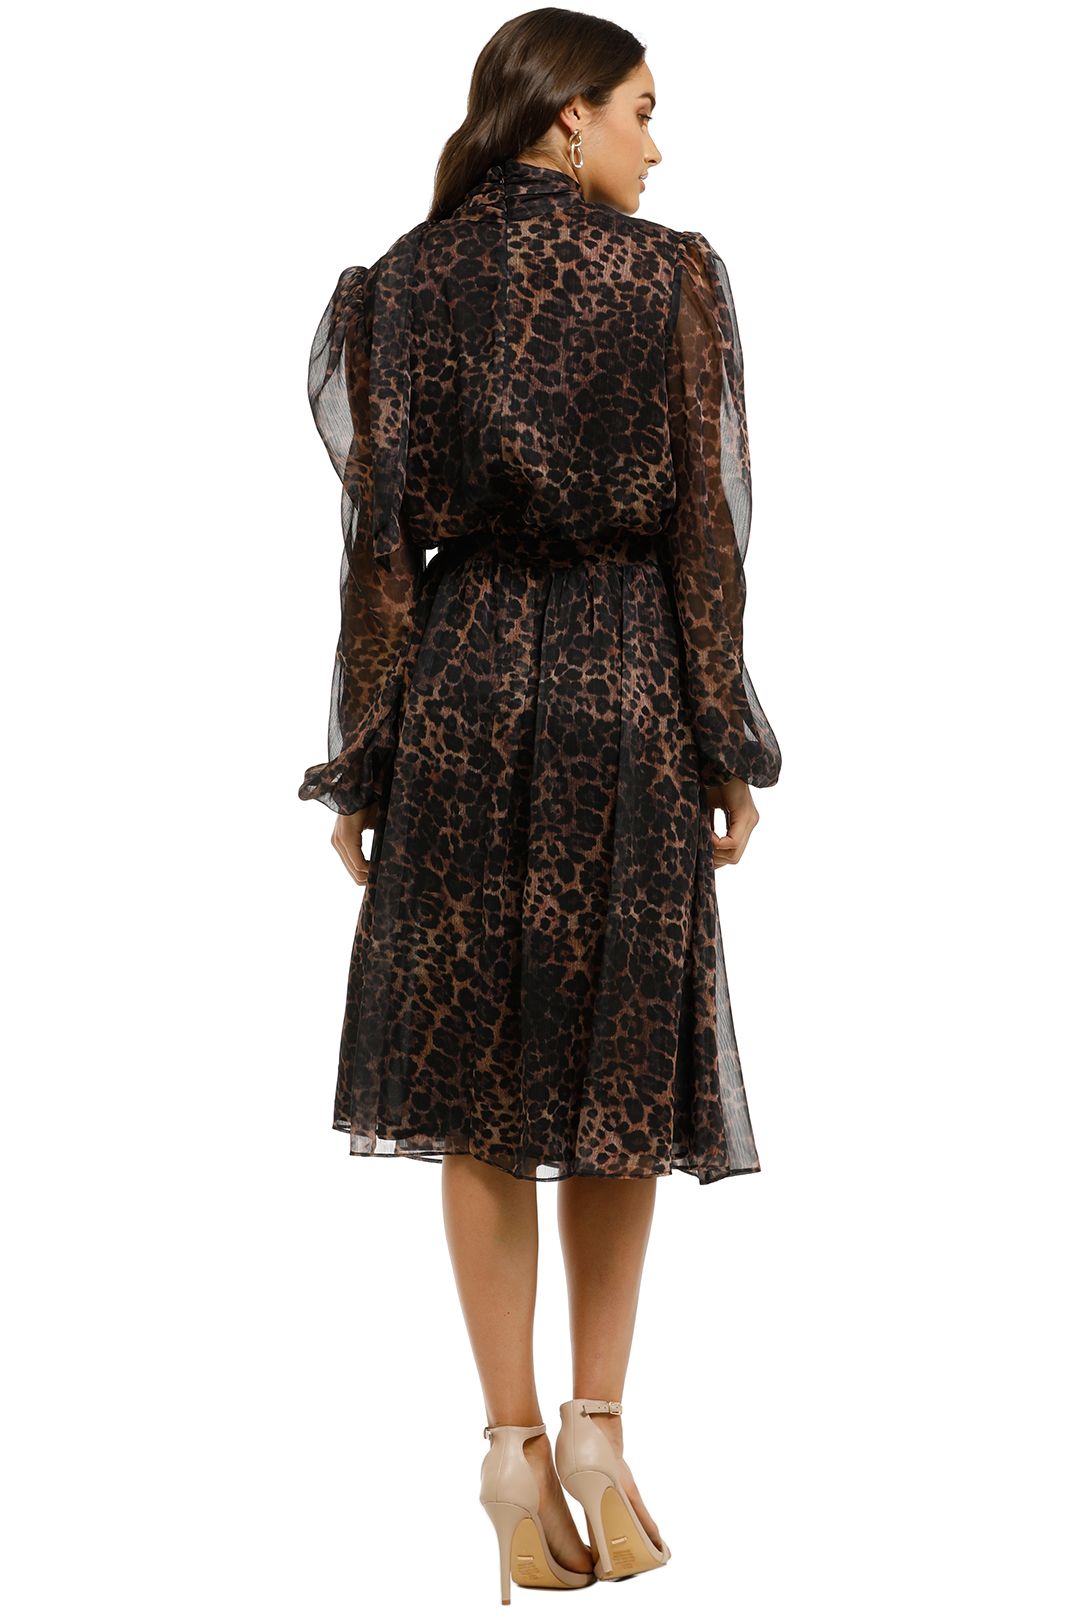 Misha-Collection-Sofia-Dress-Leopard-Back